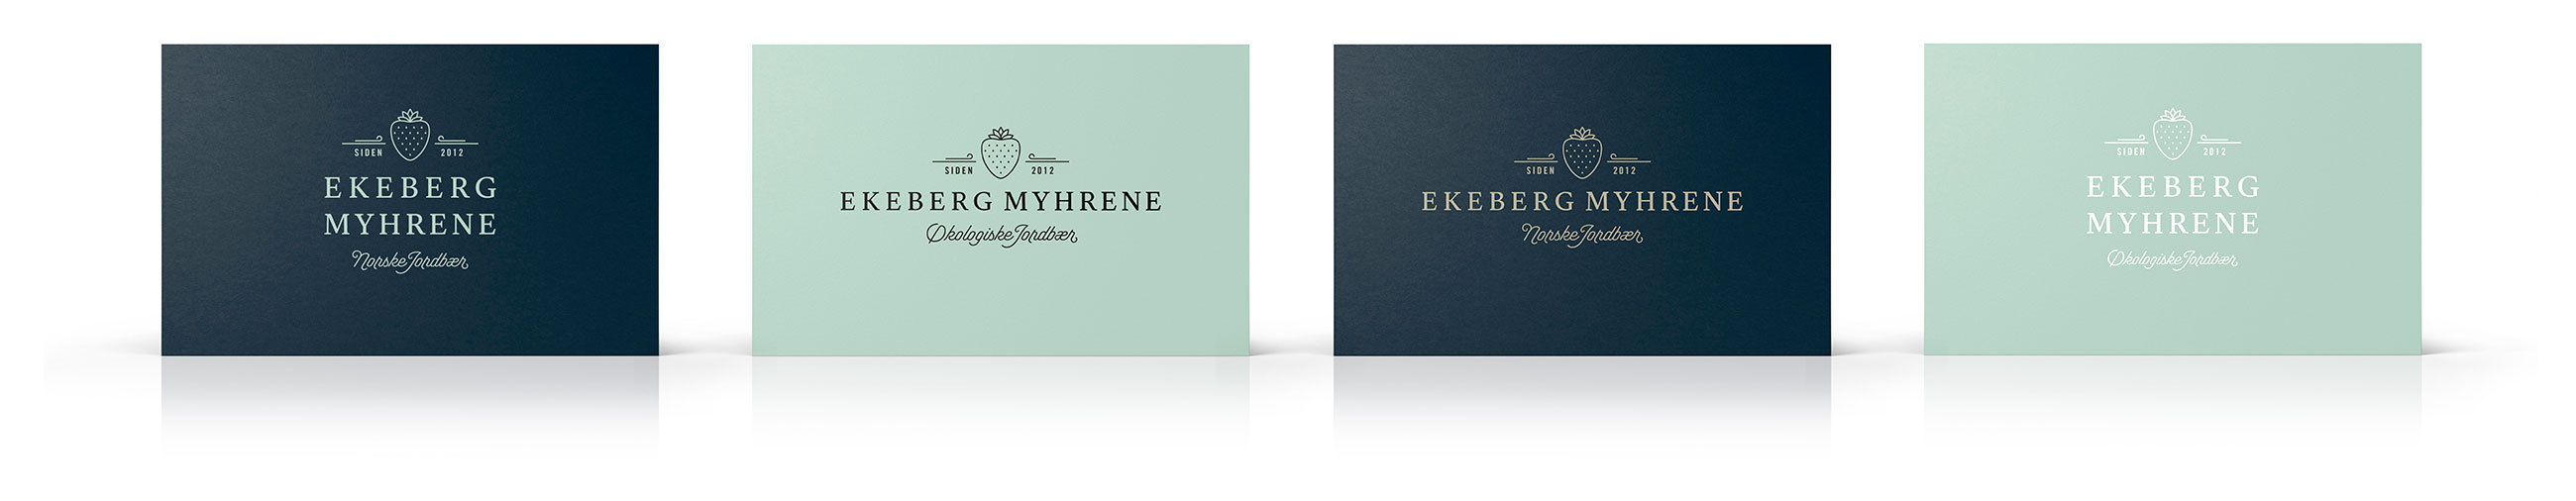 Ekeberg Myhrene visittkort business card. Visuell identitet Visual identity.